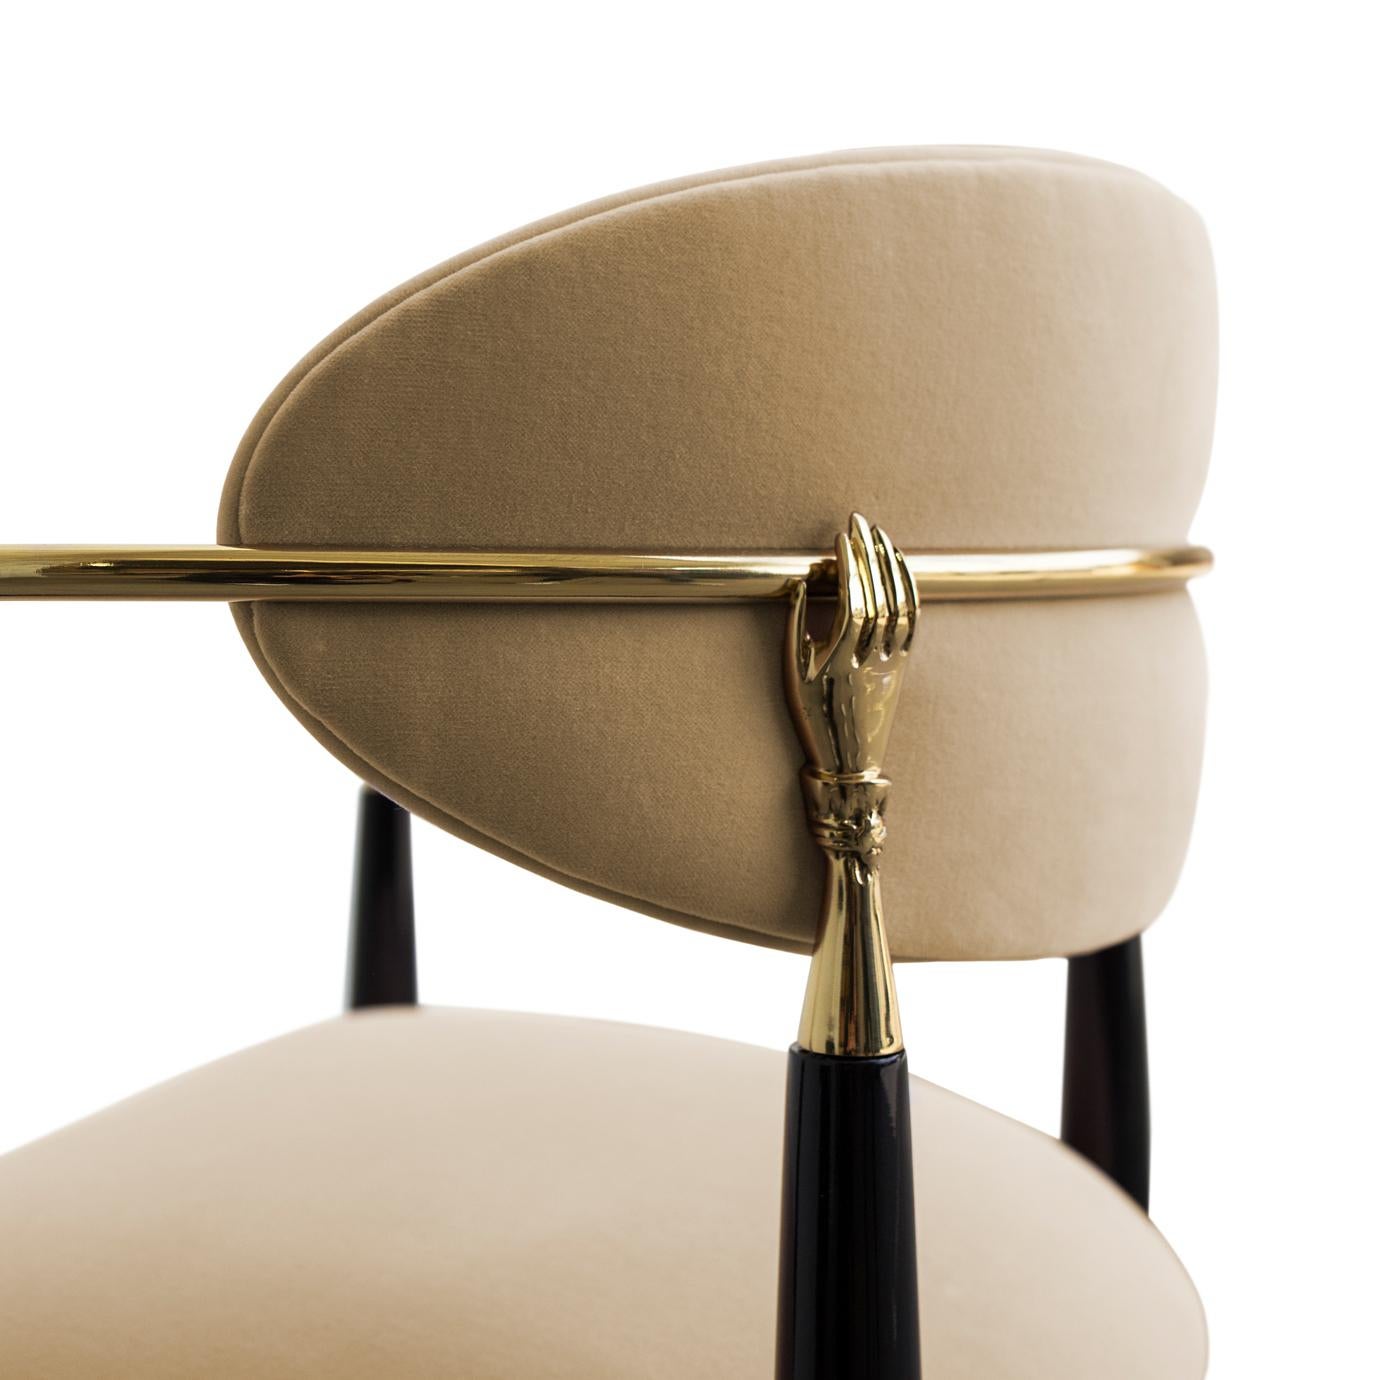 Nahéma Luxury Chair In New Condition For Sale In Manassas, VA